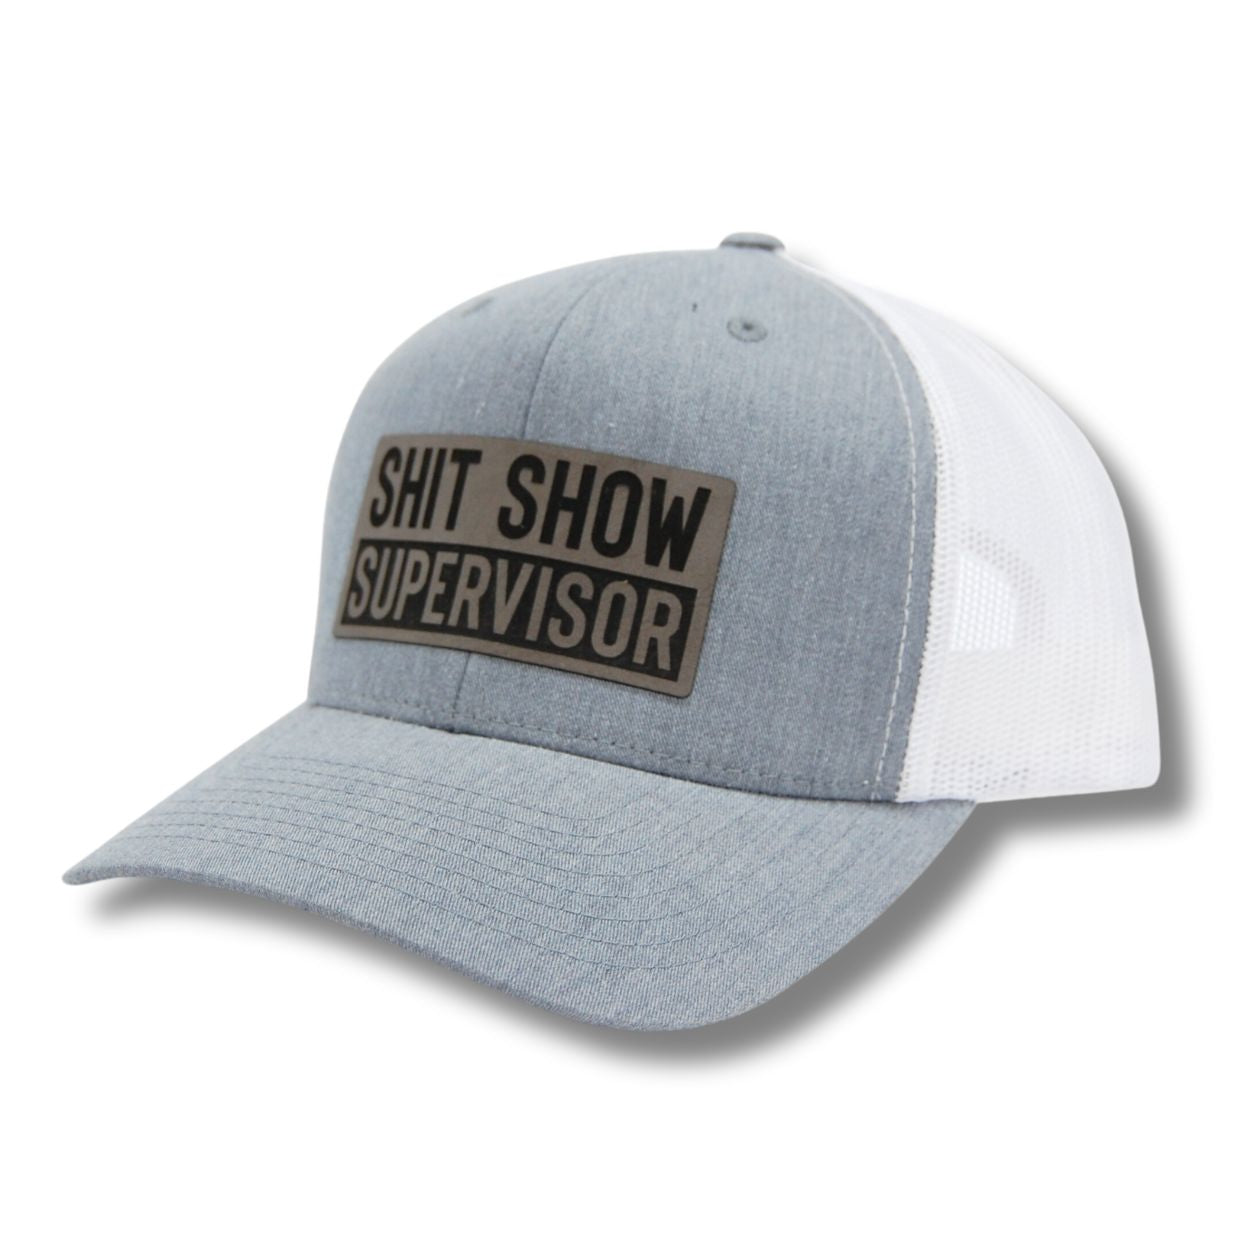 Shit Show Supervisor Patch Hat Snapback Trucker Cap Blue Collar Patriot 